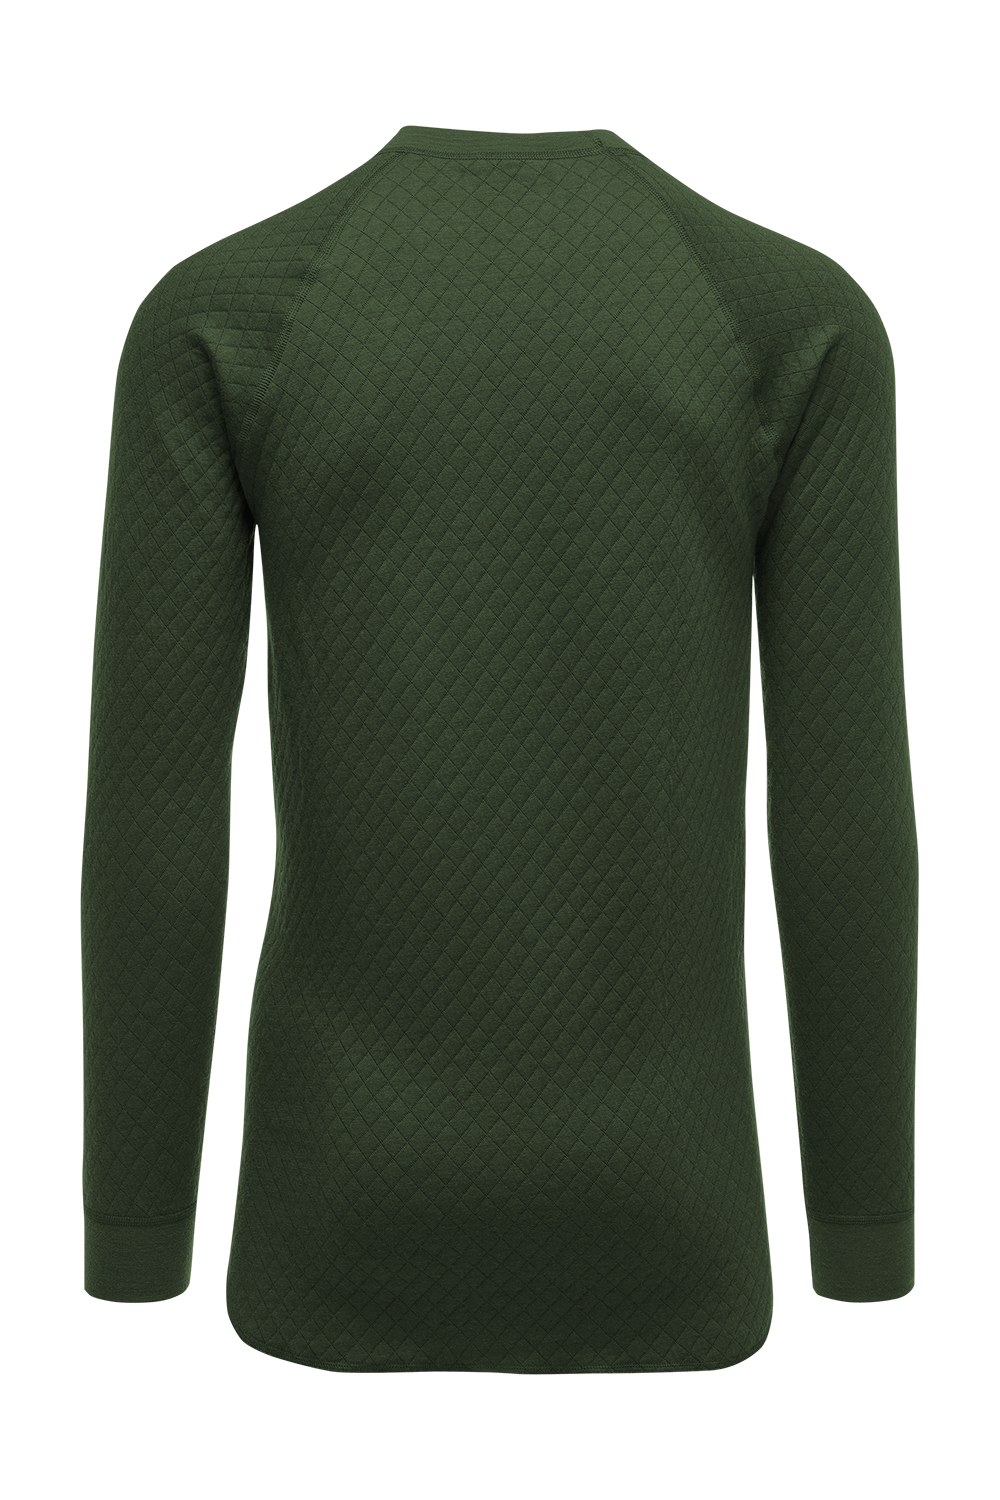 Men's Shirt LS 3in1 - Forest Green